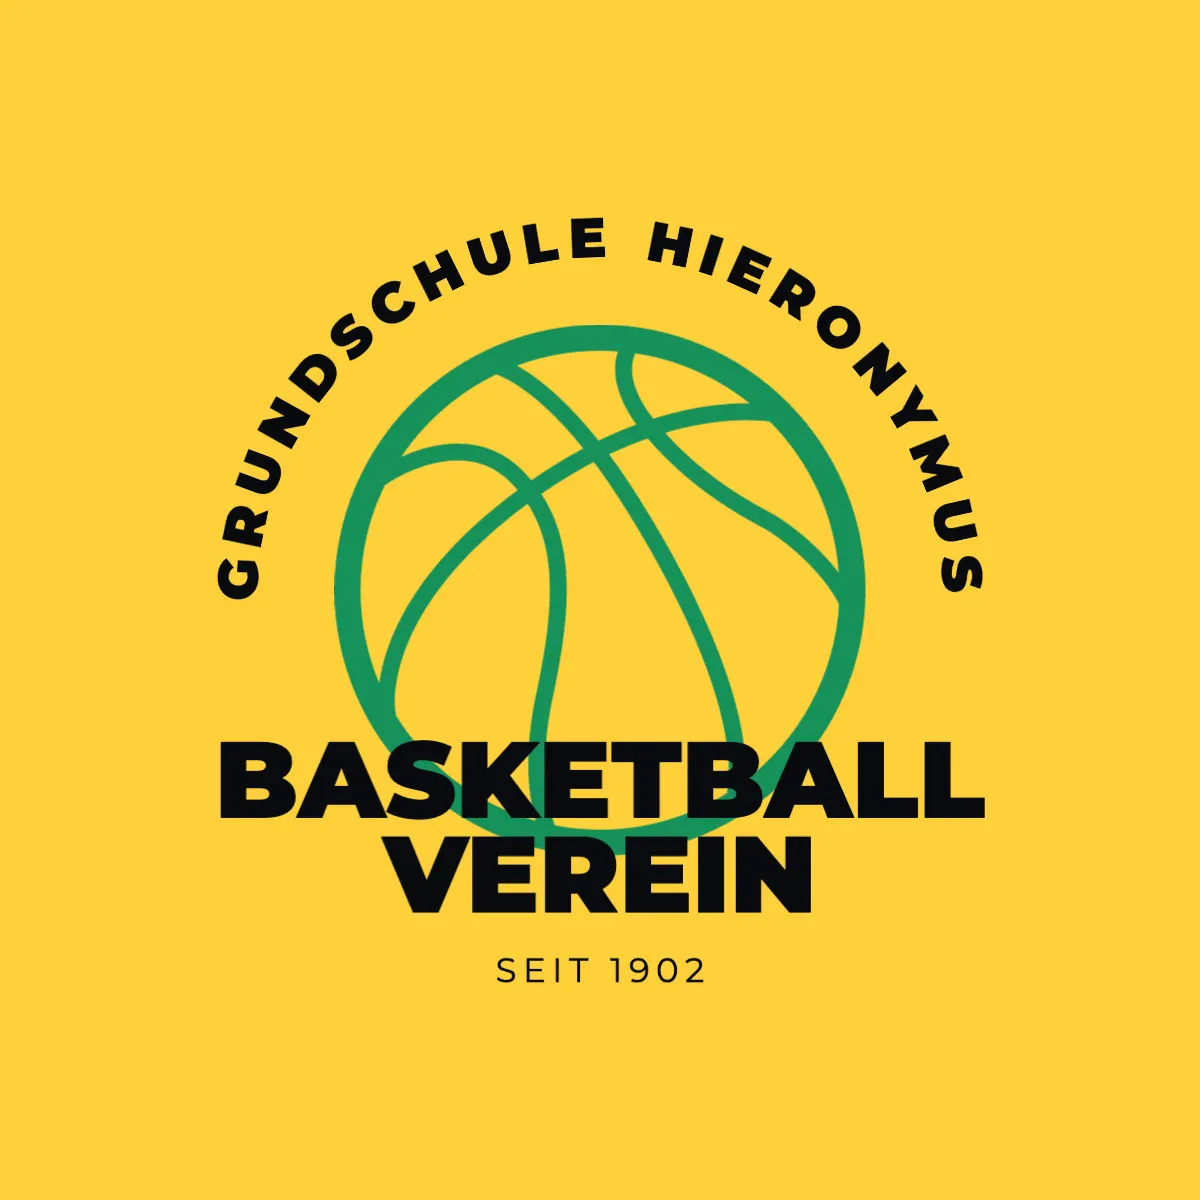 Yellow and Green School Basketball Team Logo